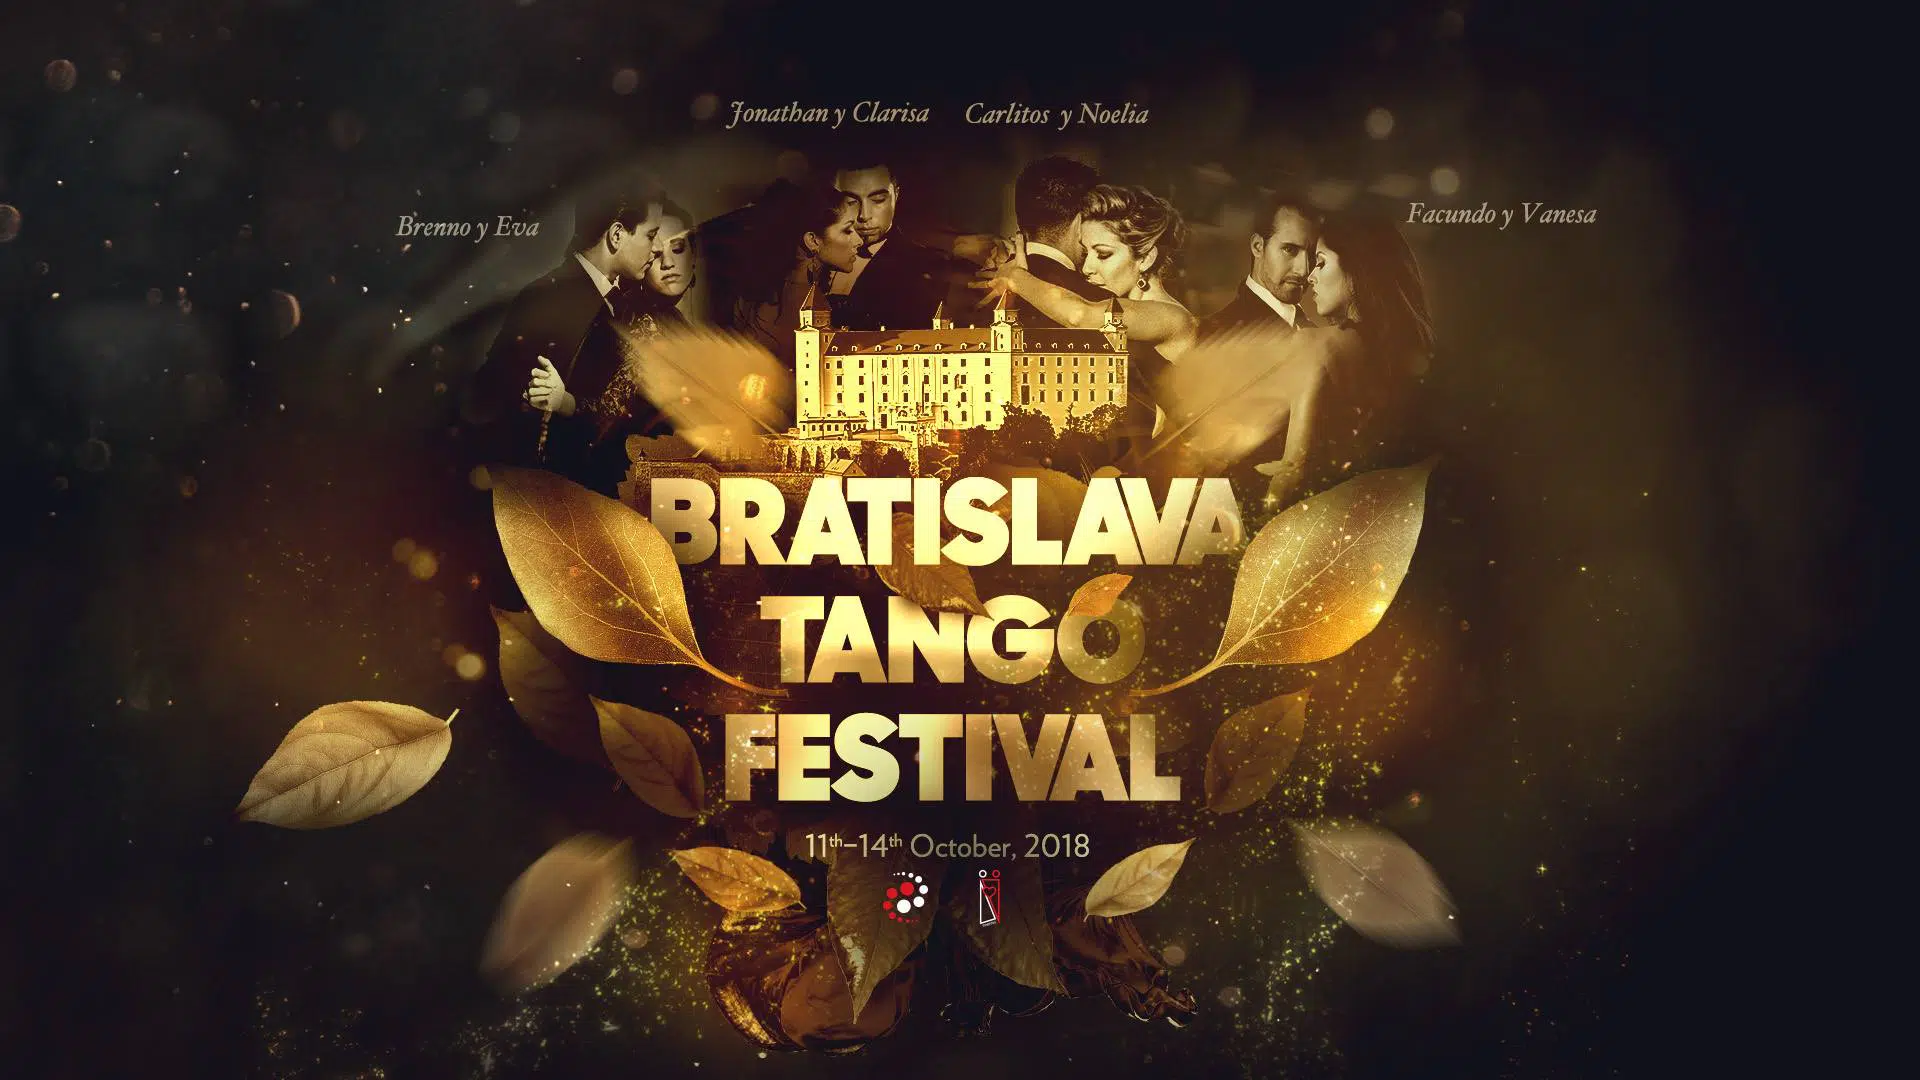 Bratislava Tango Festival 2018 Preview Image